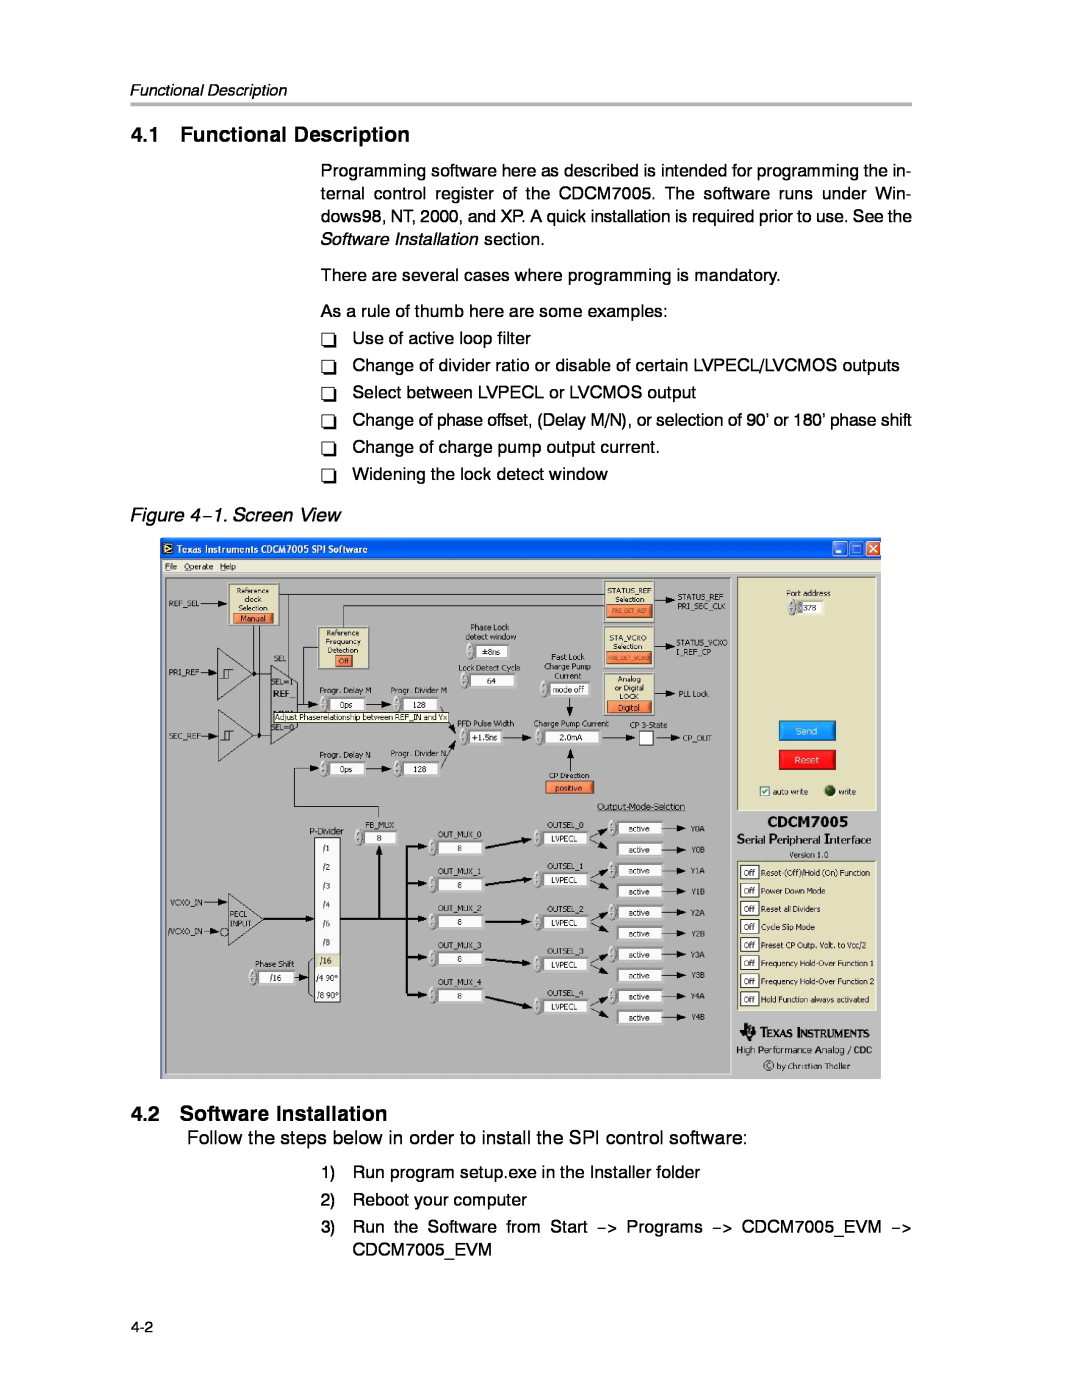 Texas Instruments CDCM7005 manual Functional Description, Software Installation, 1. Screen View 